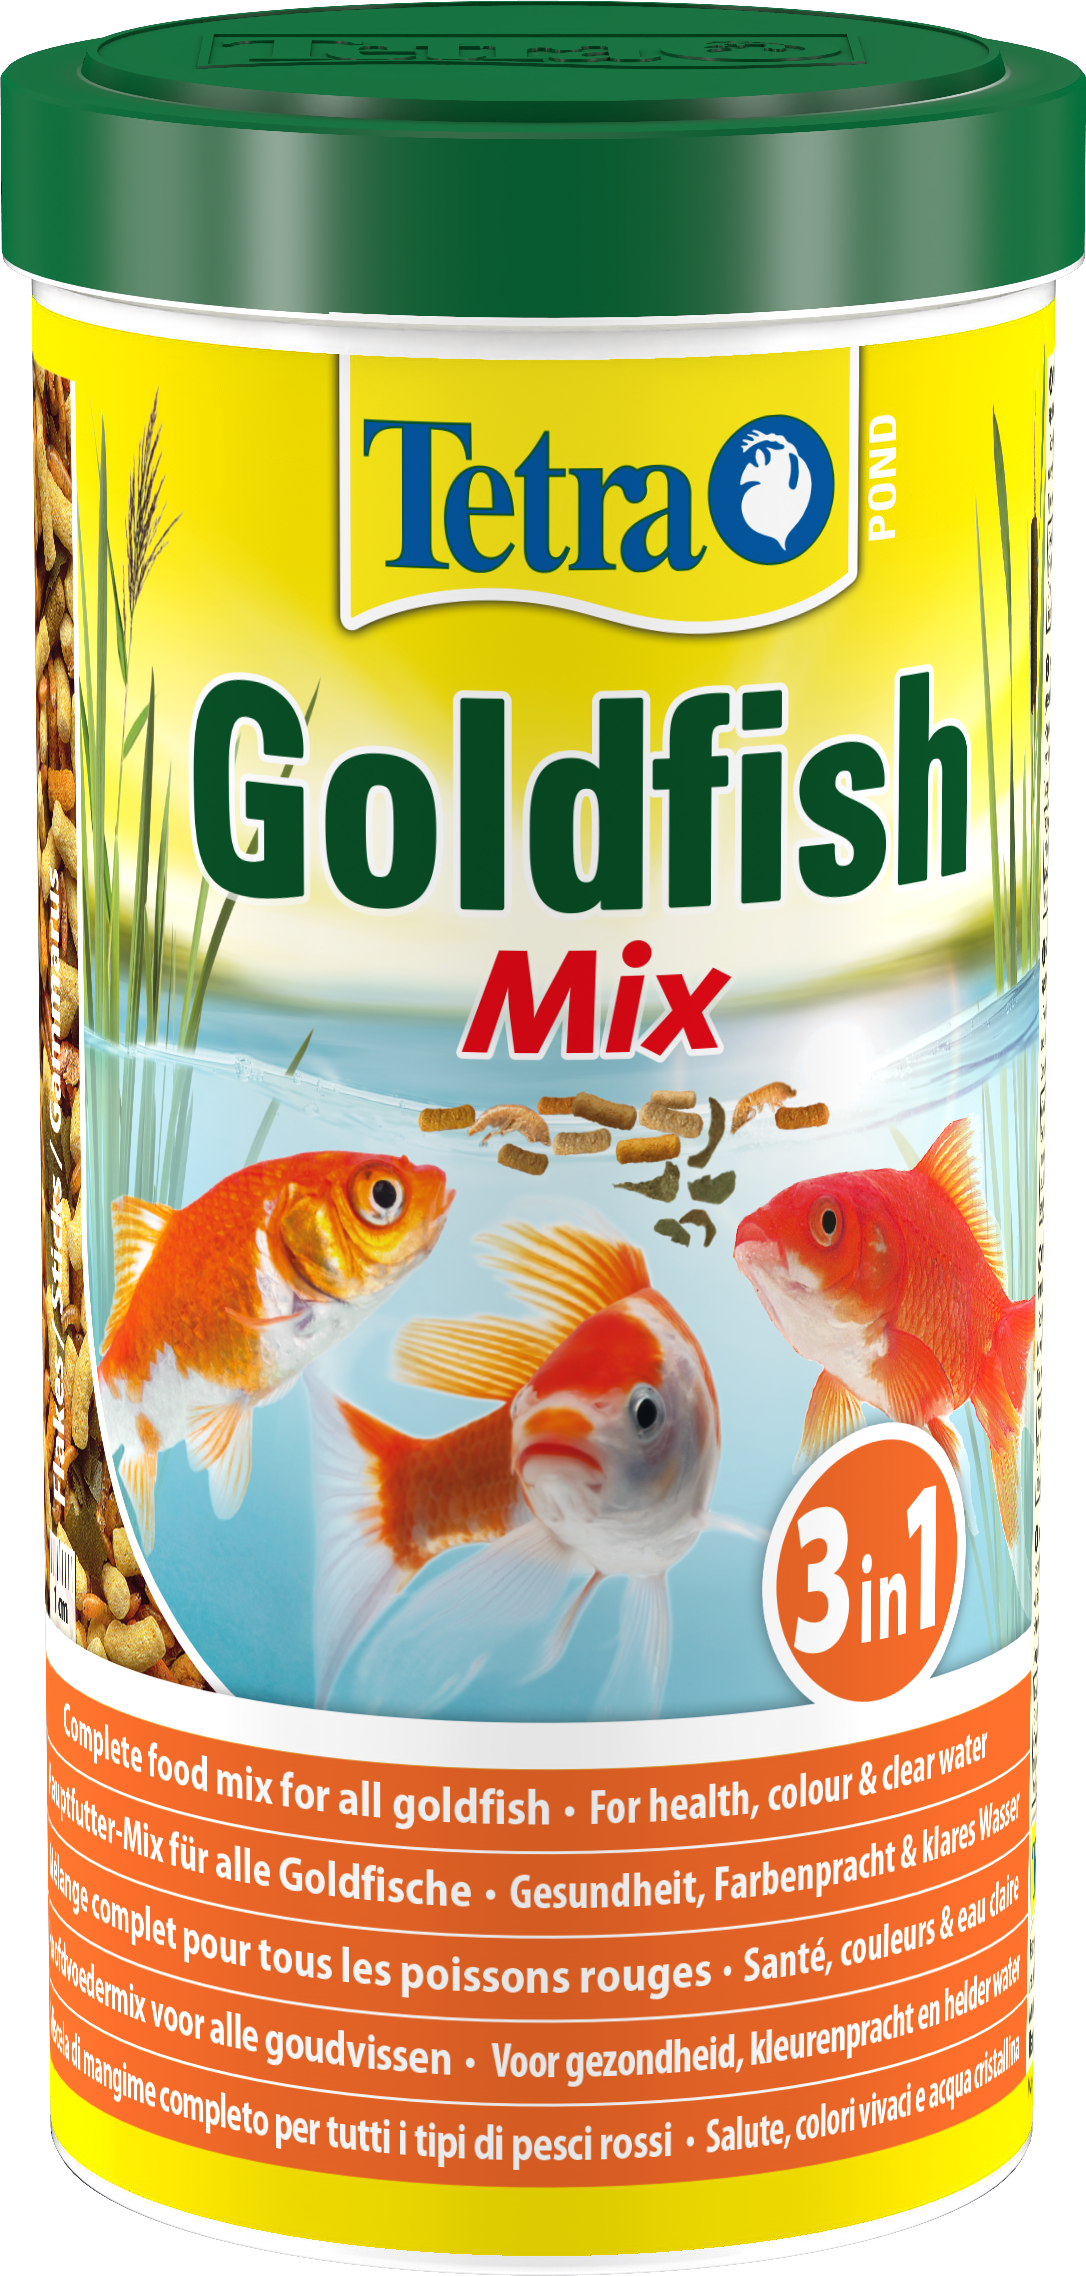 Tetra Pond Goldfish Mix - Boutique en ligne Olibetta